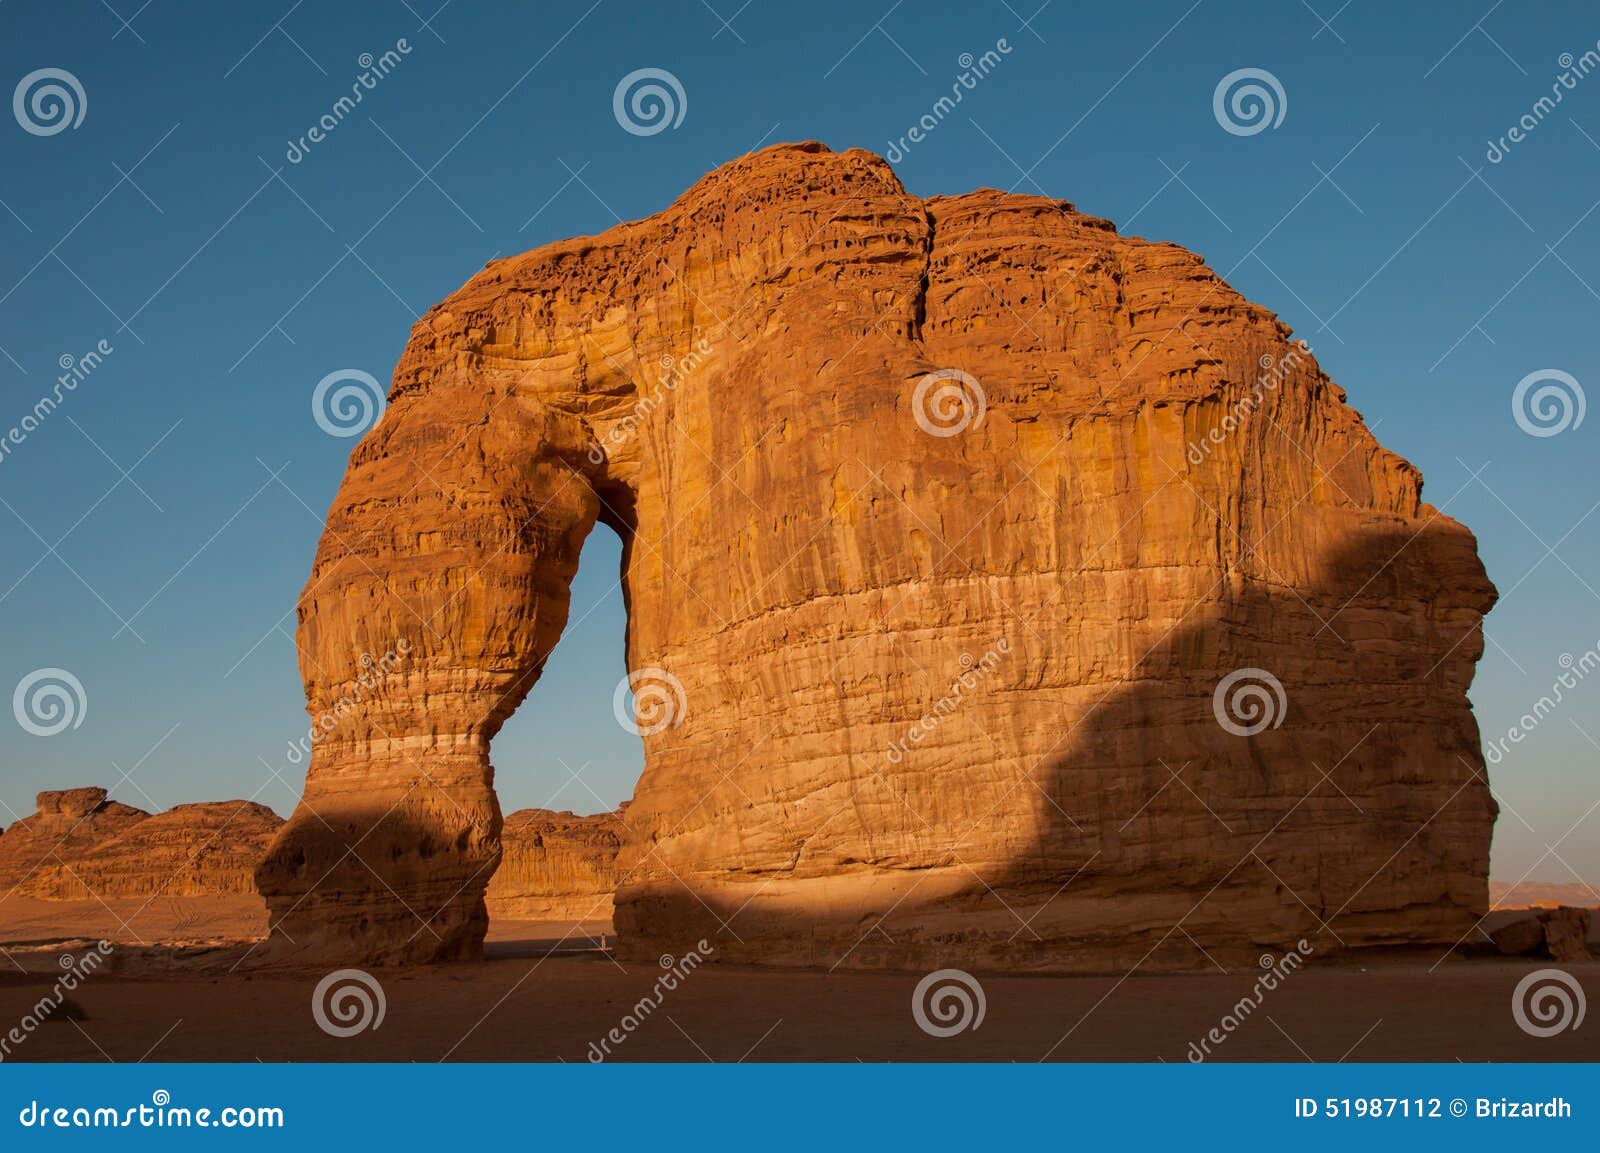 eleplant rock formation in the deserts of saudi arabia